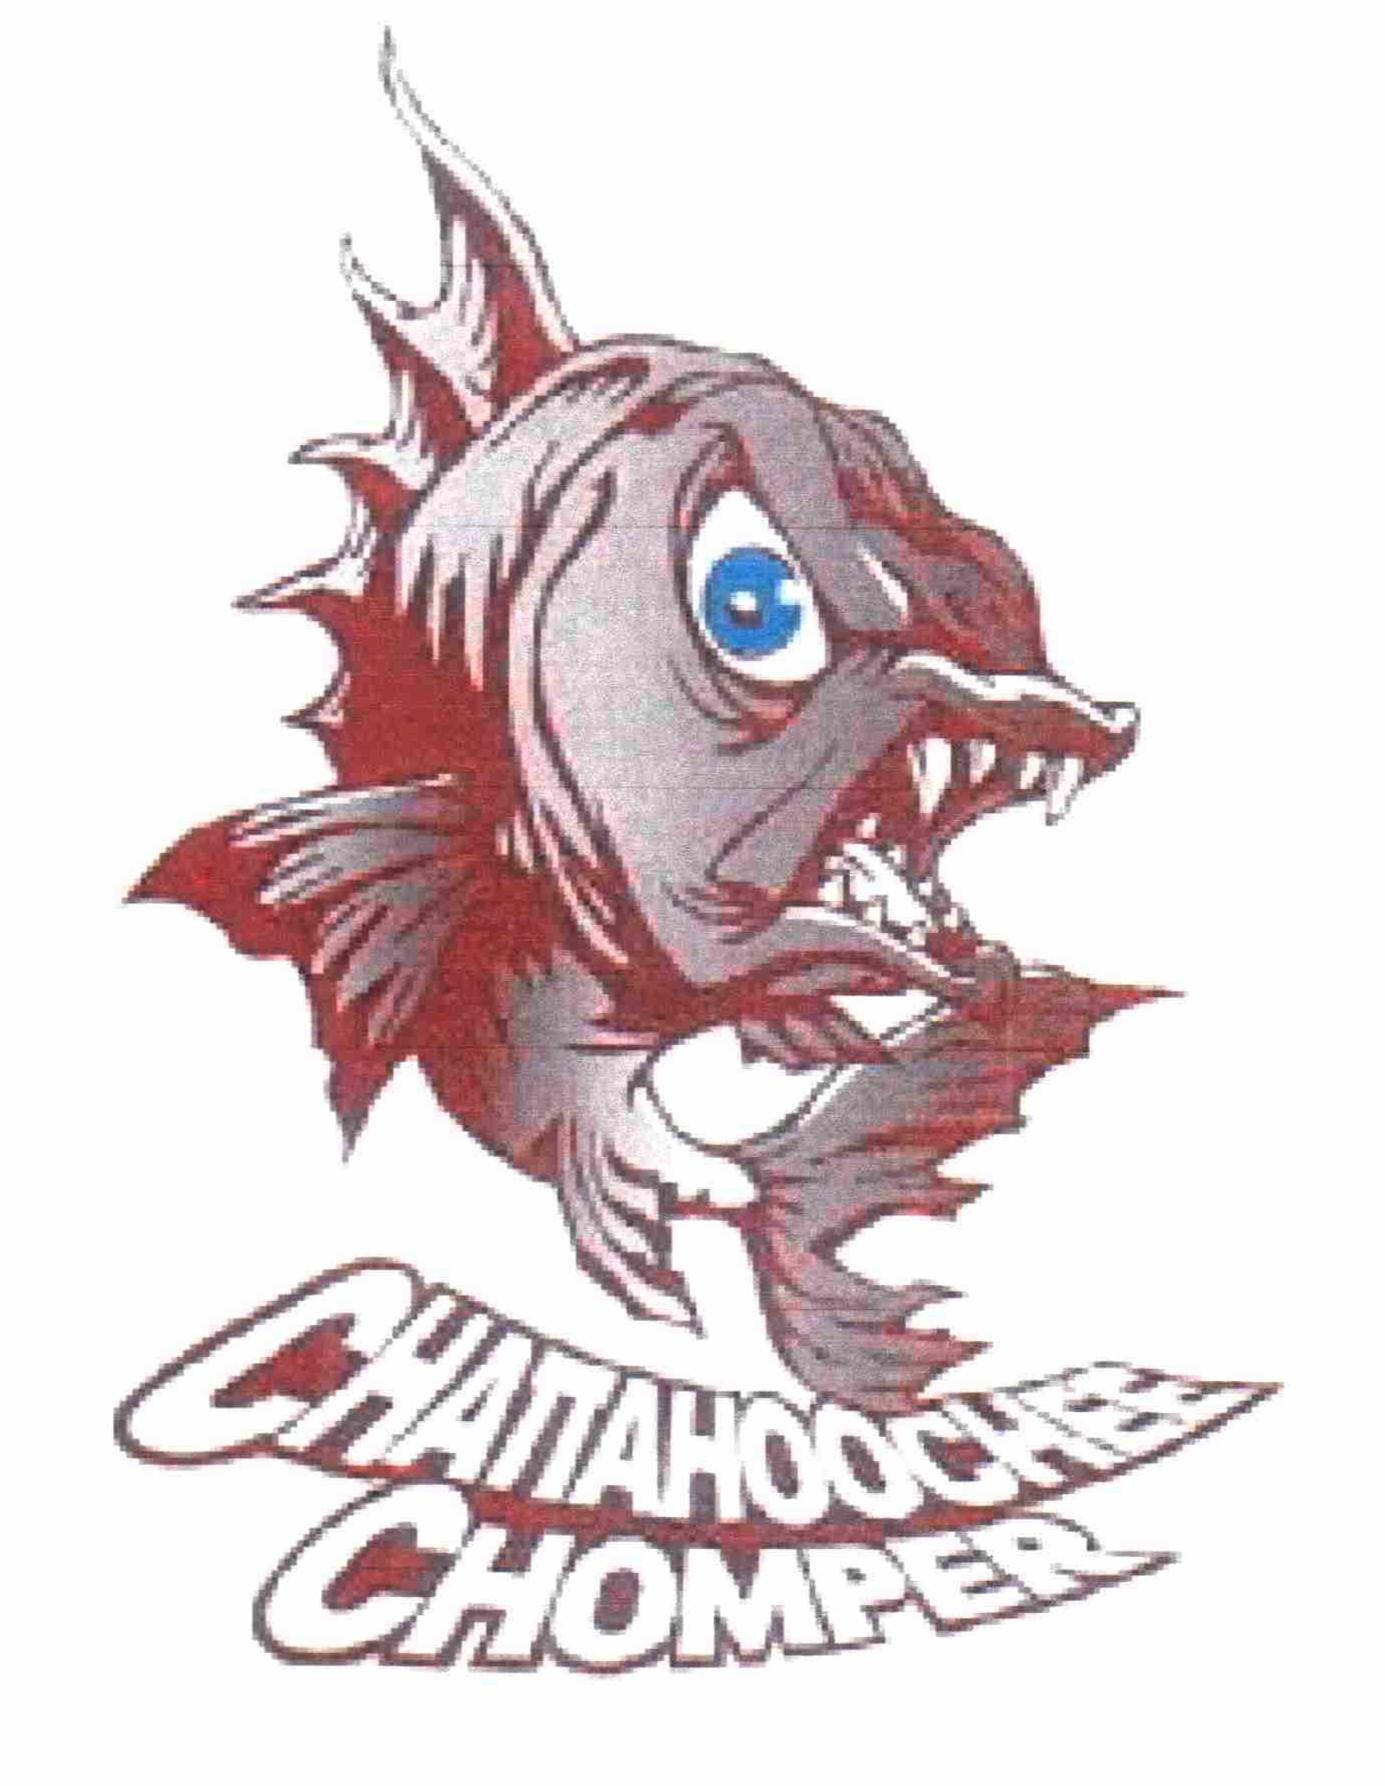  CHATTAHOOCHEE CHOMPER